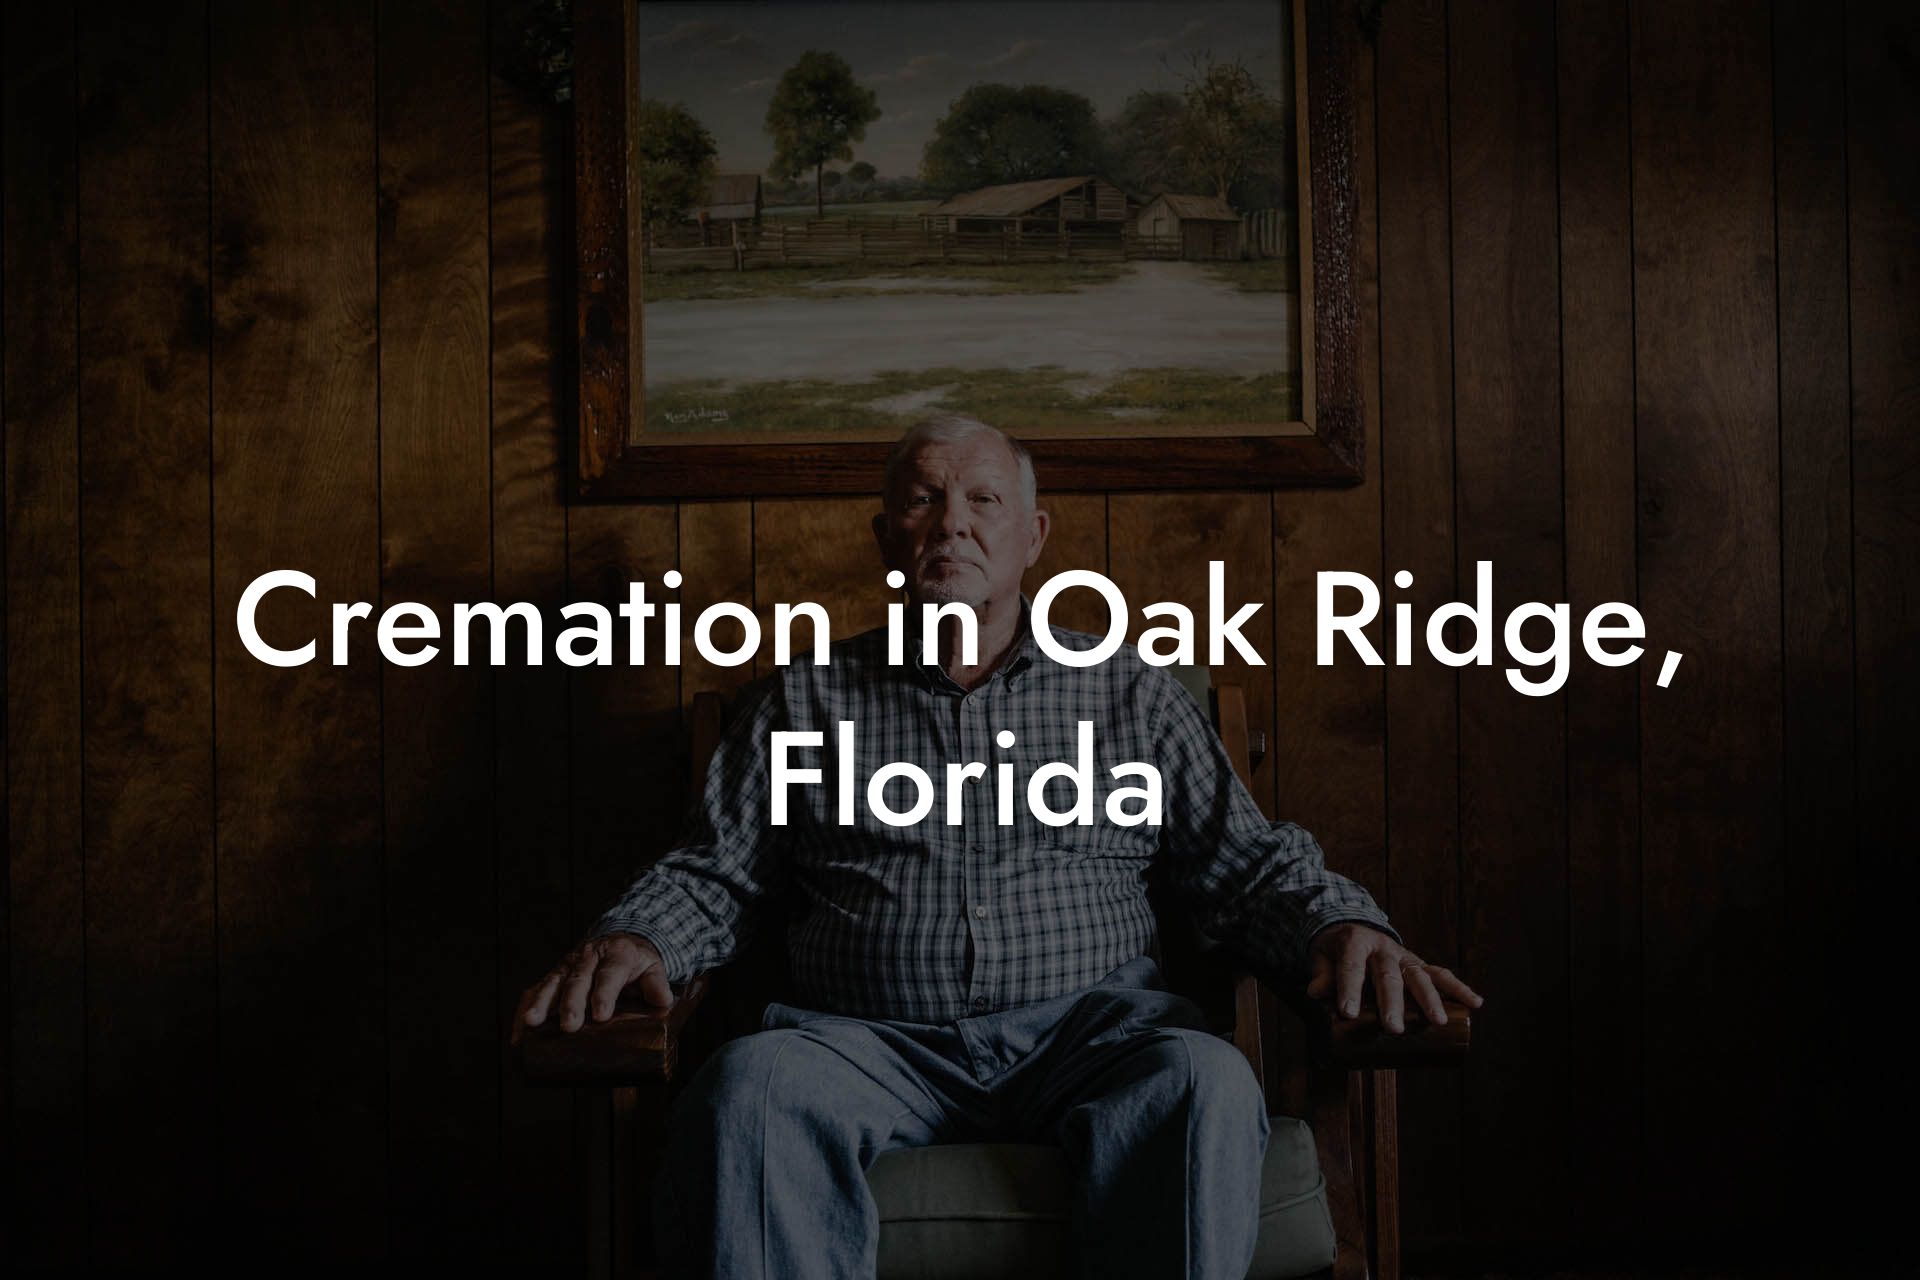 Cremation in Oak Ridge, Florida